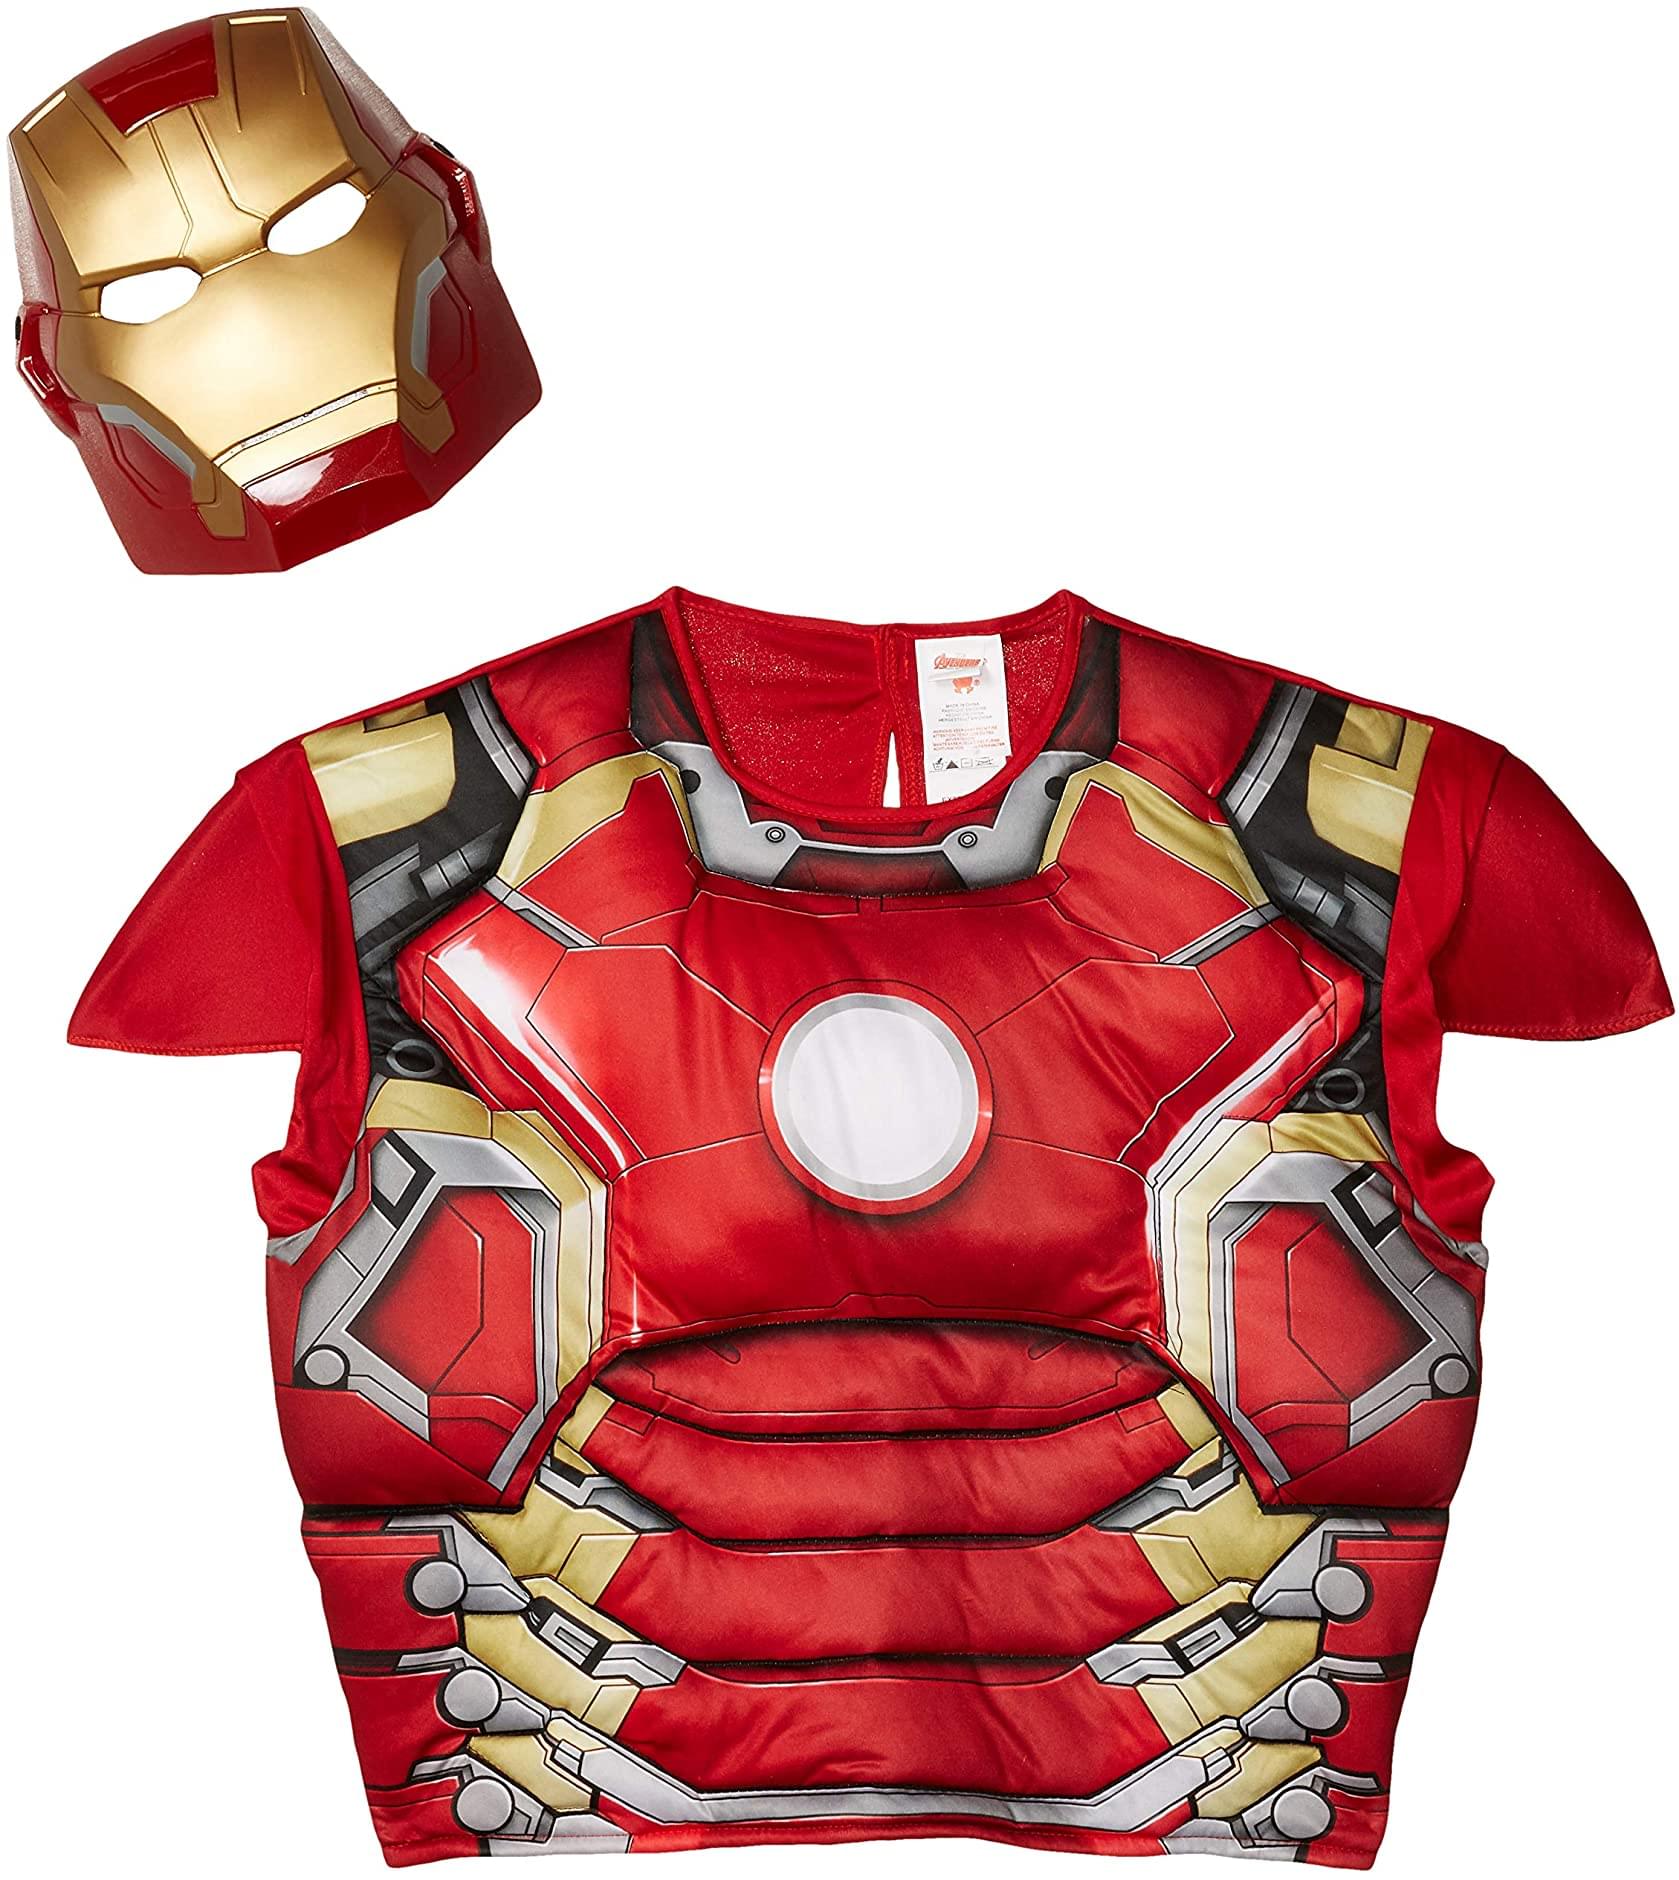 Marvel Avengers Iron Man Mark 43 Adult Costume Muscle Shirt and Mask